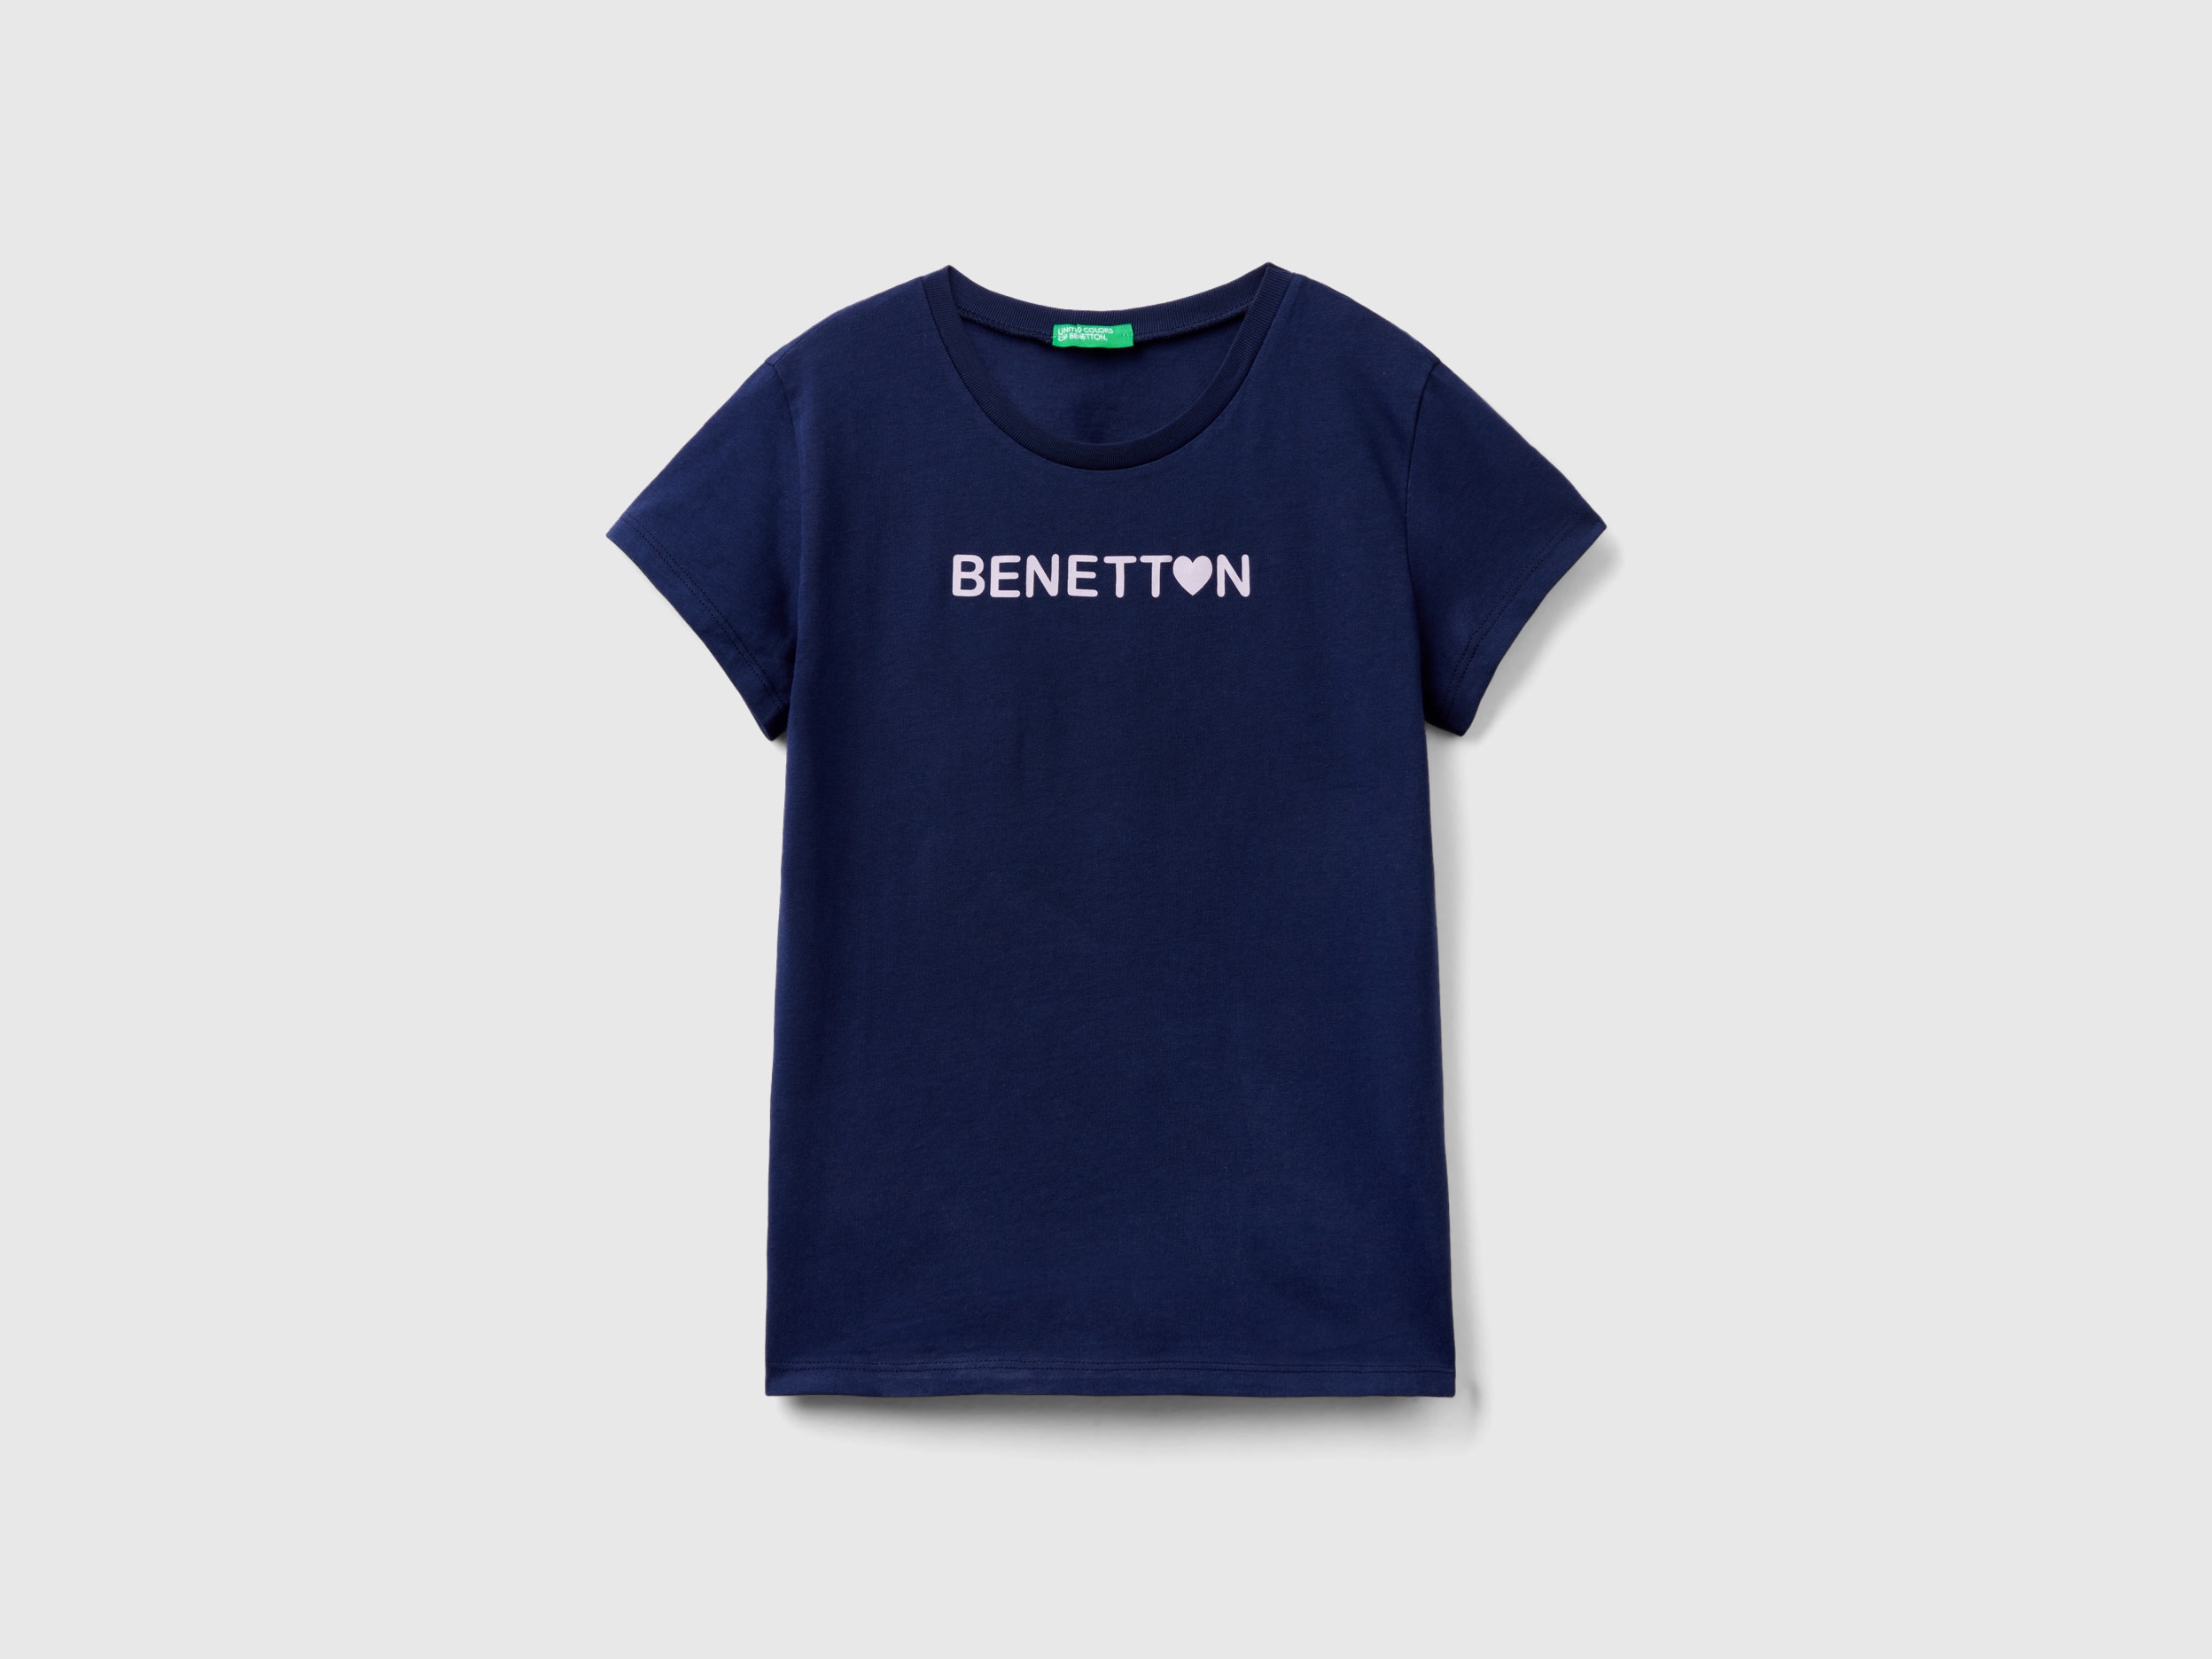 Benetton, 100% Cotton T-shirt With Logo, size 3XL, Dark Blue, Kids